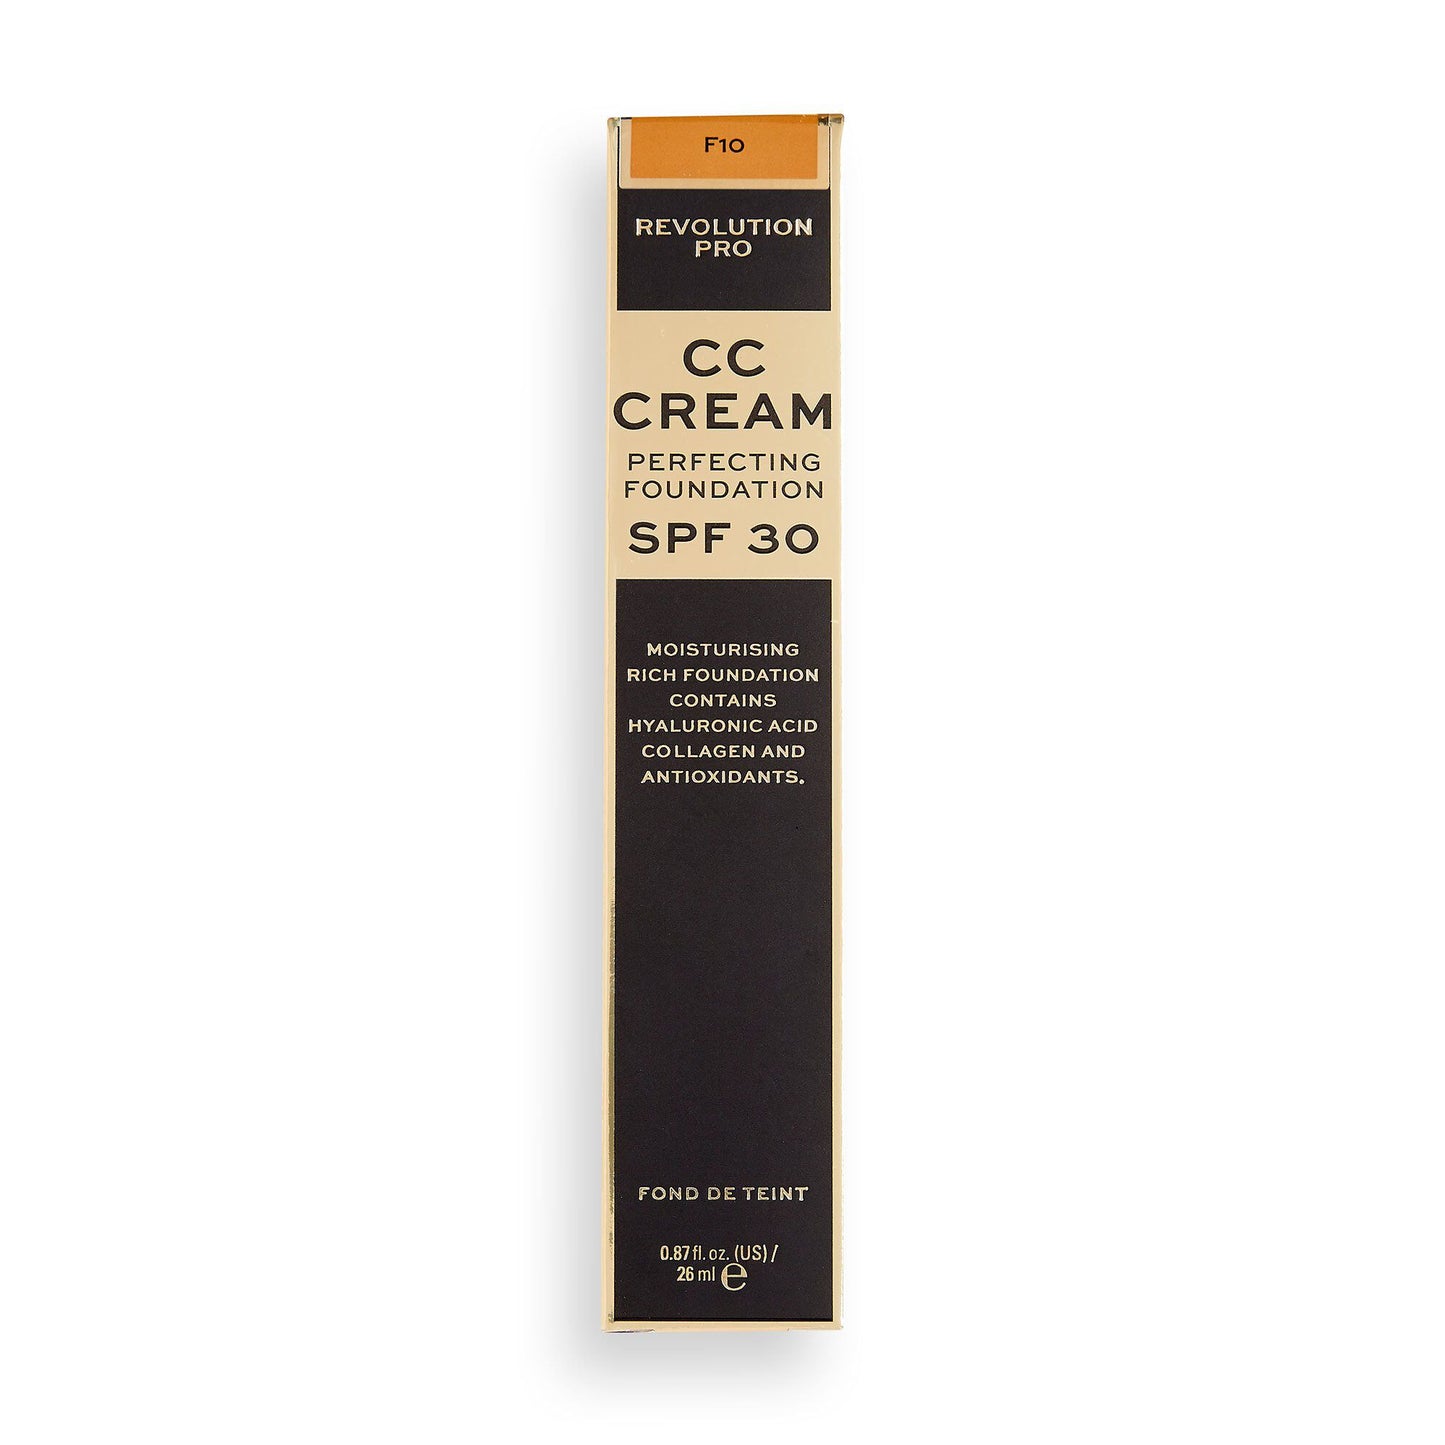 Revolution Pro CC Cream Perfecting Foundation SPF30 F10